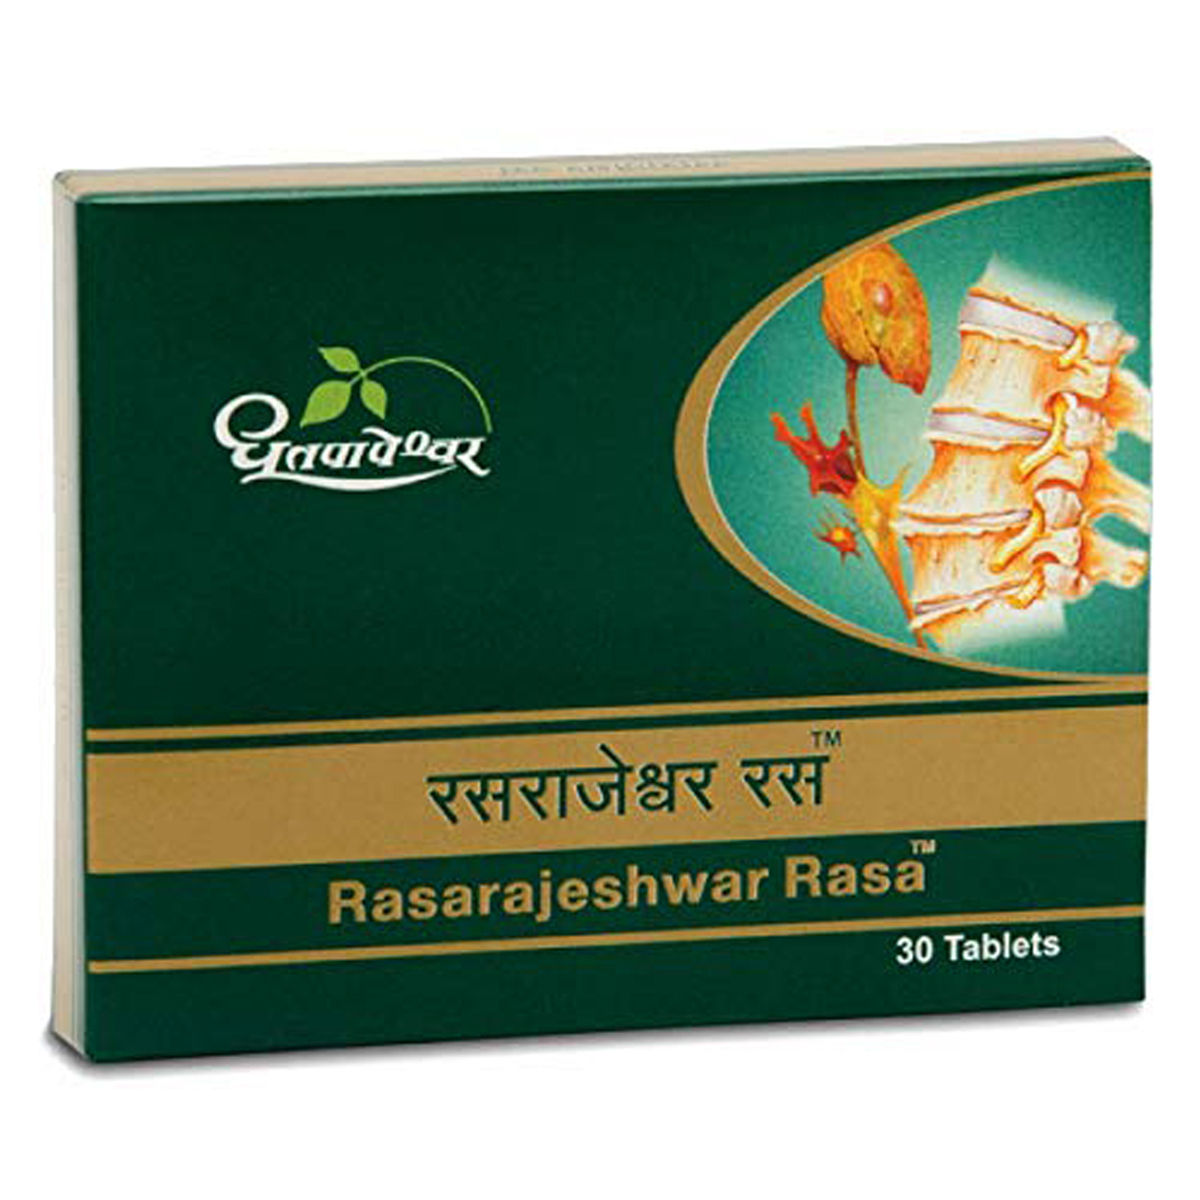 Dhootapapeshwar Rasarajeshwar Rasa, 30 Tablets, Pack of 1 